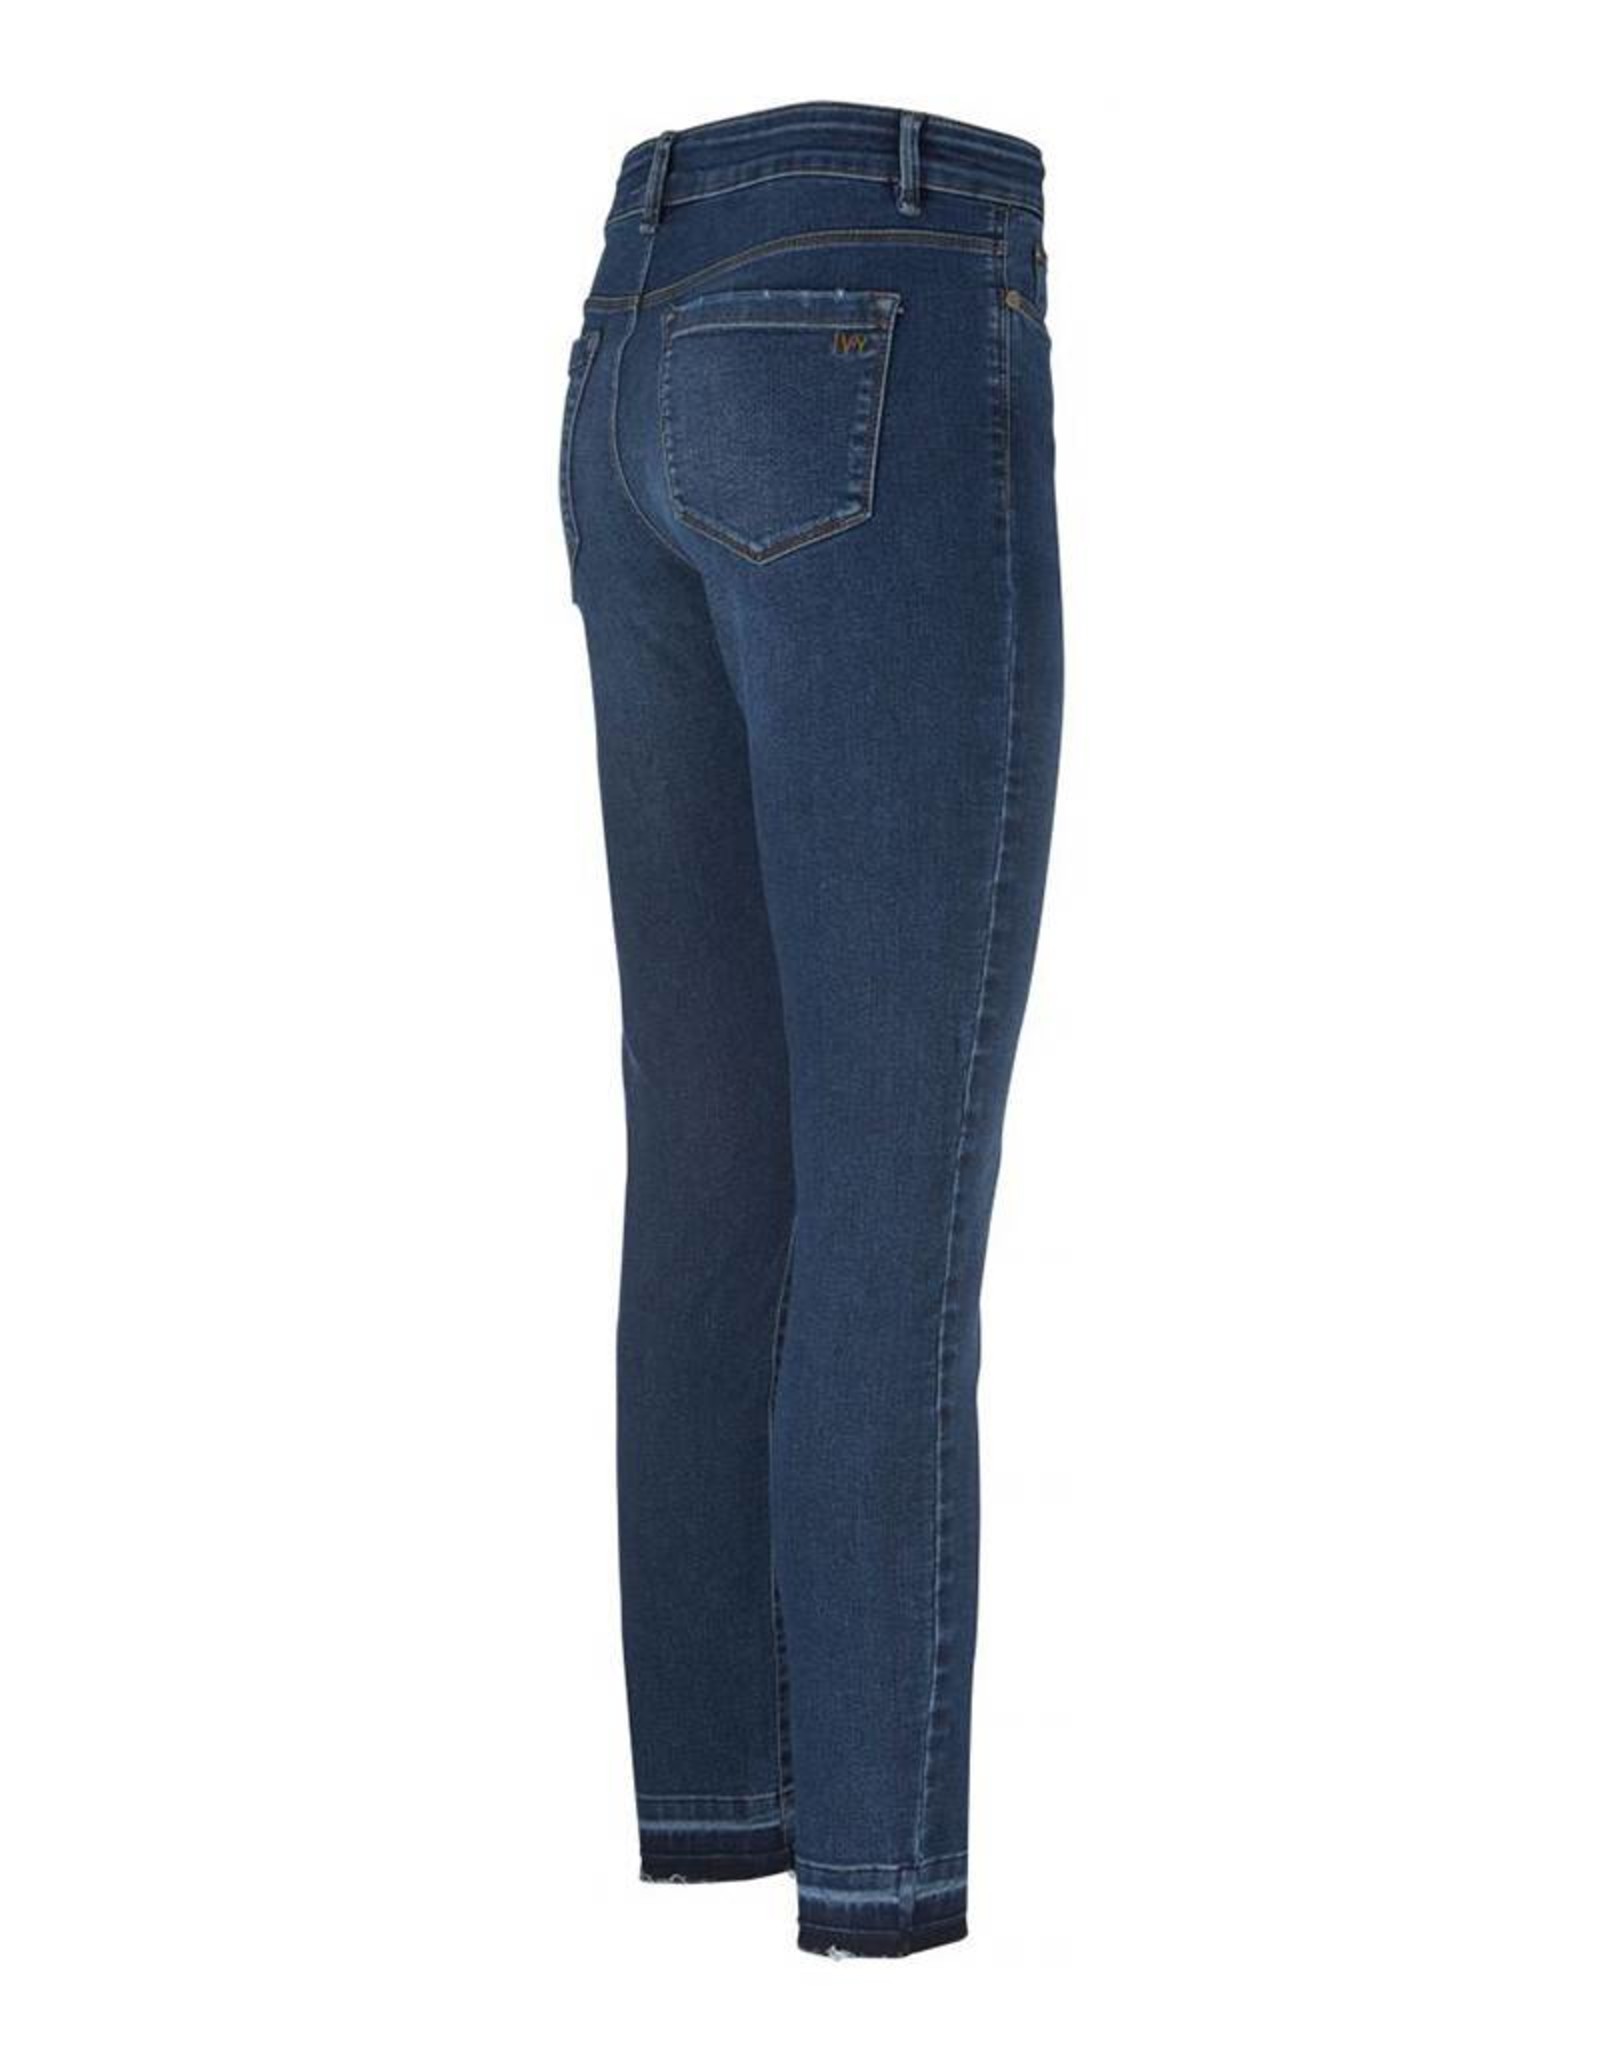 Ivy Alexa ankle jeans